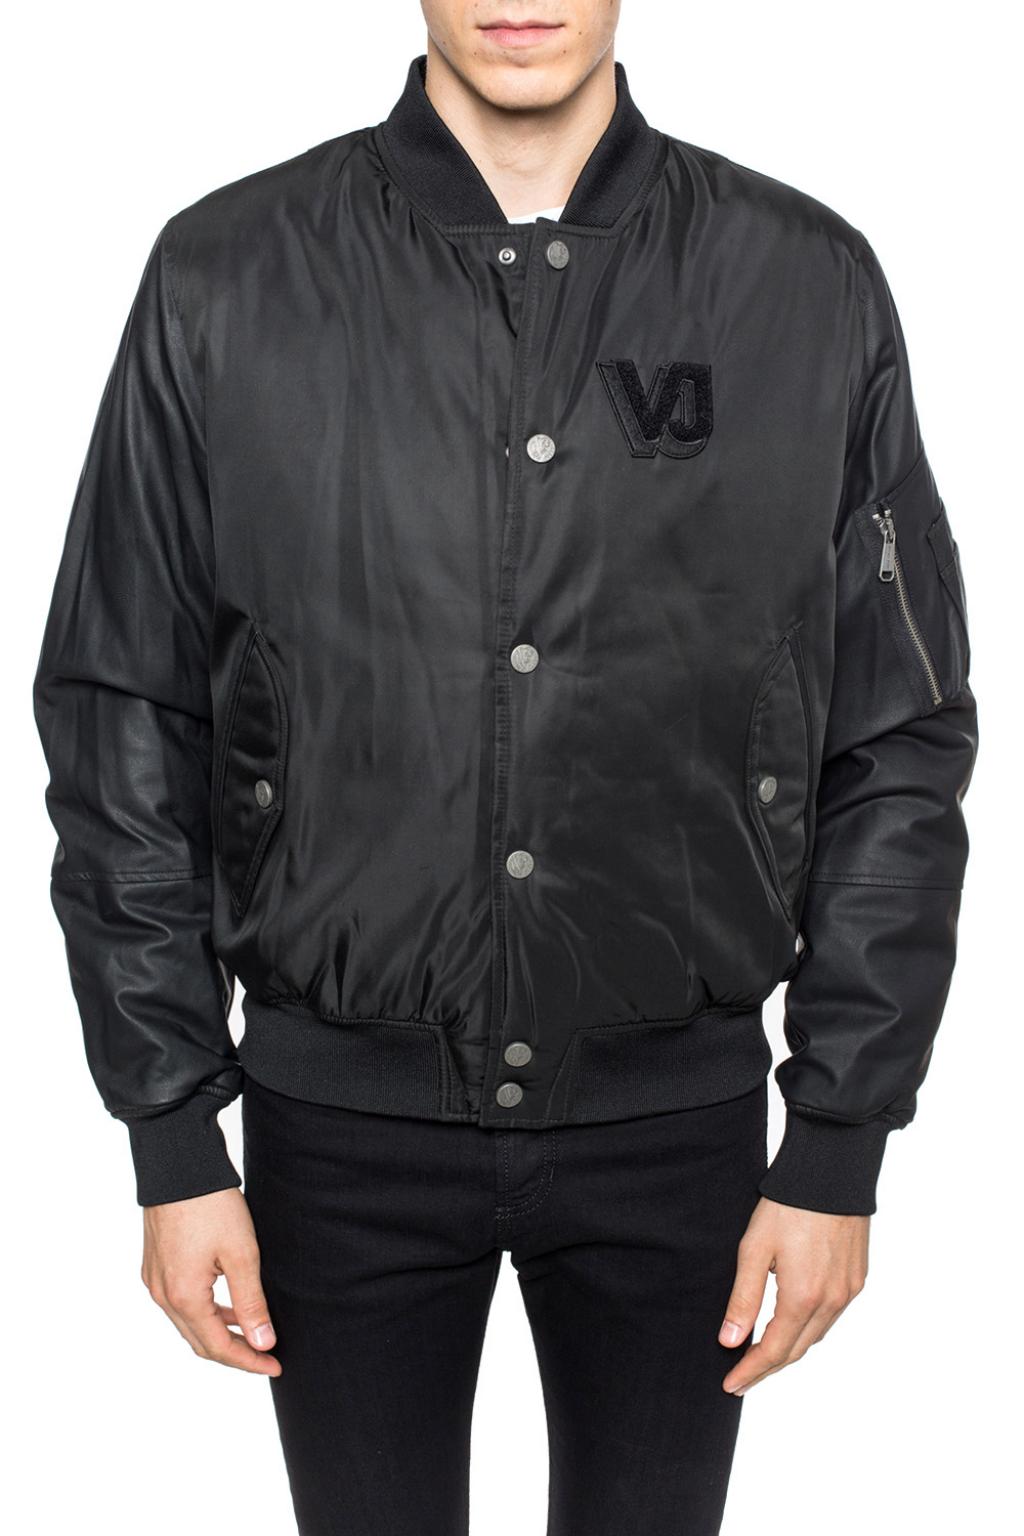 versace jeans bomber jacket